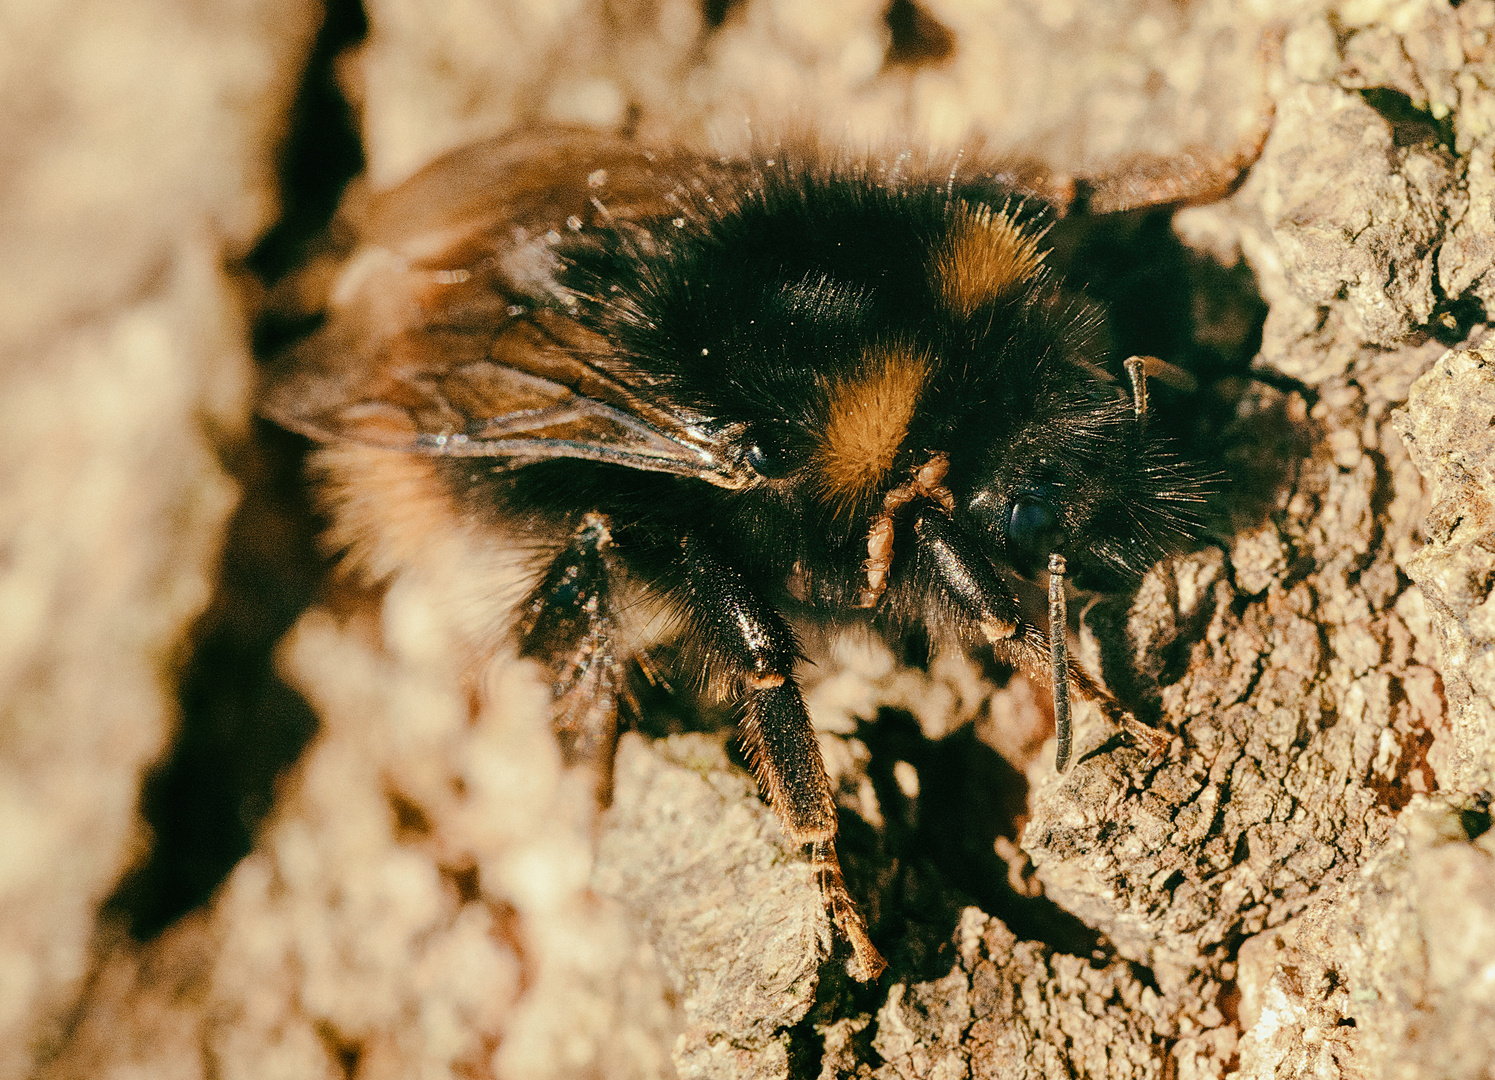 Wiesenhummel (Bombus pratorum), early-nesting bumblebee